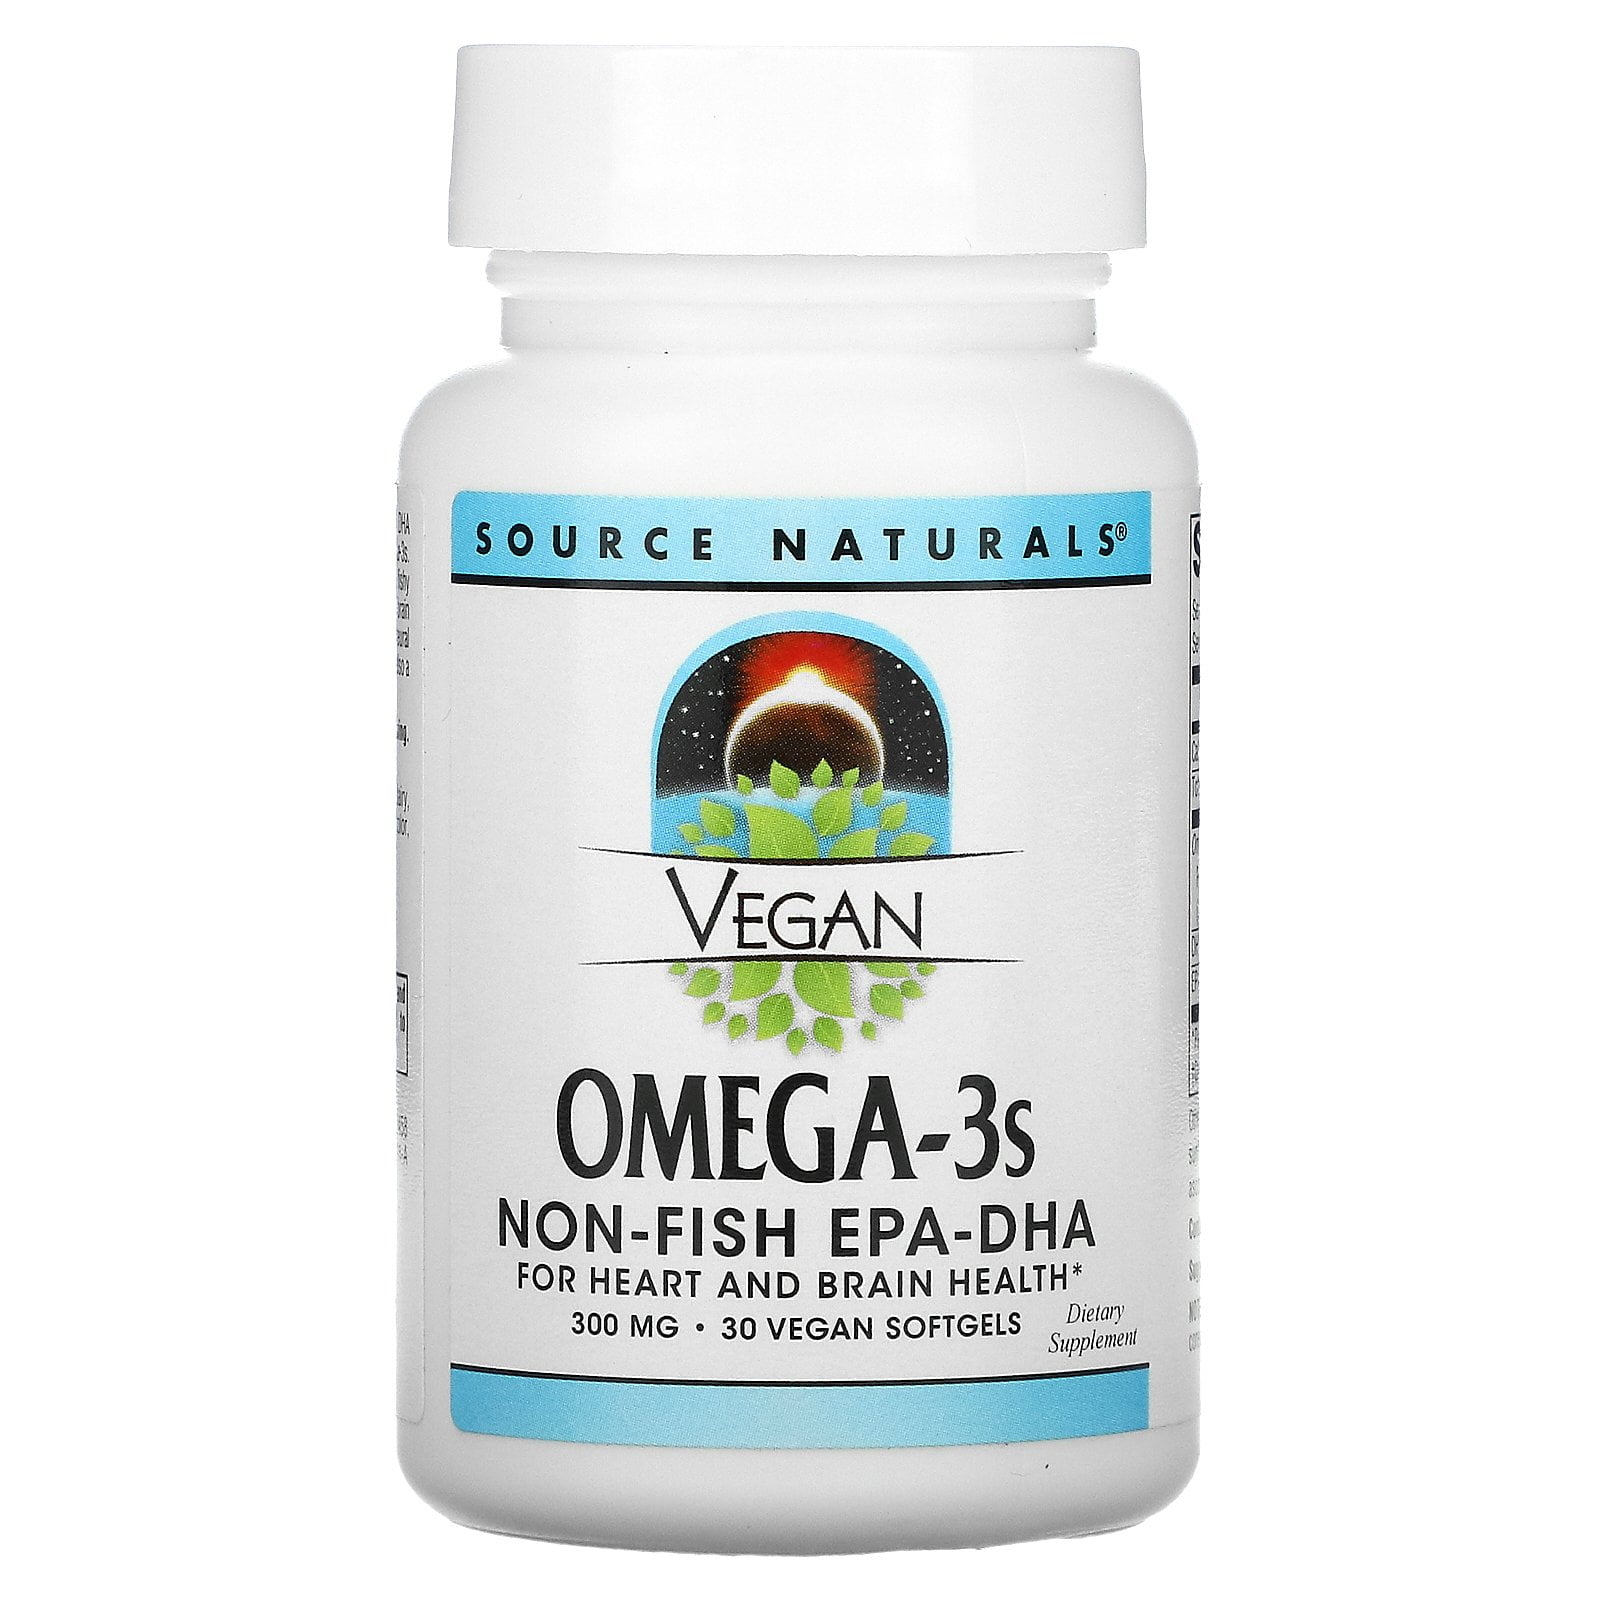 Vegan Omega-3s Non-Fish EPA-DHA, 300 mg, 30 Vegan Softgels, Source Naturals